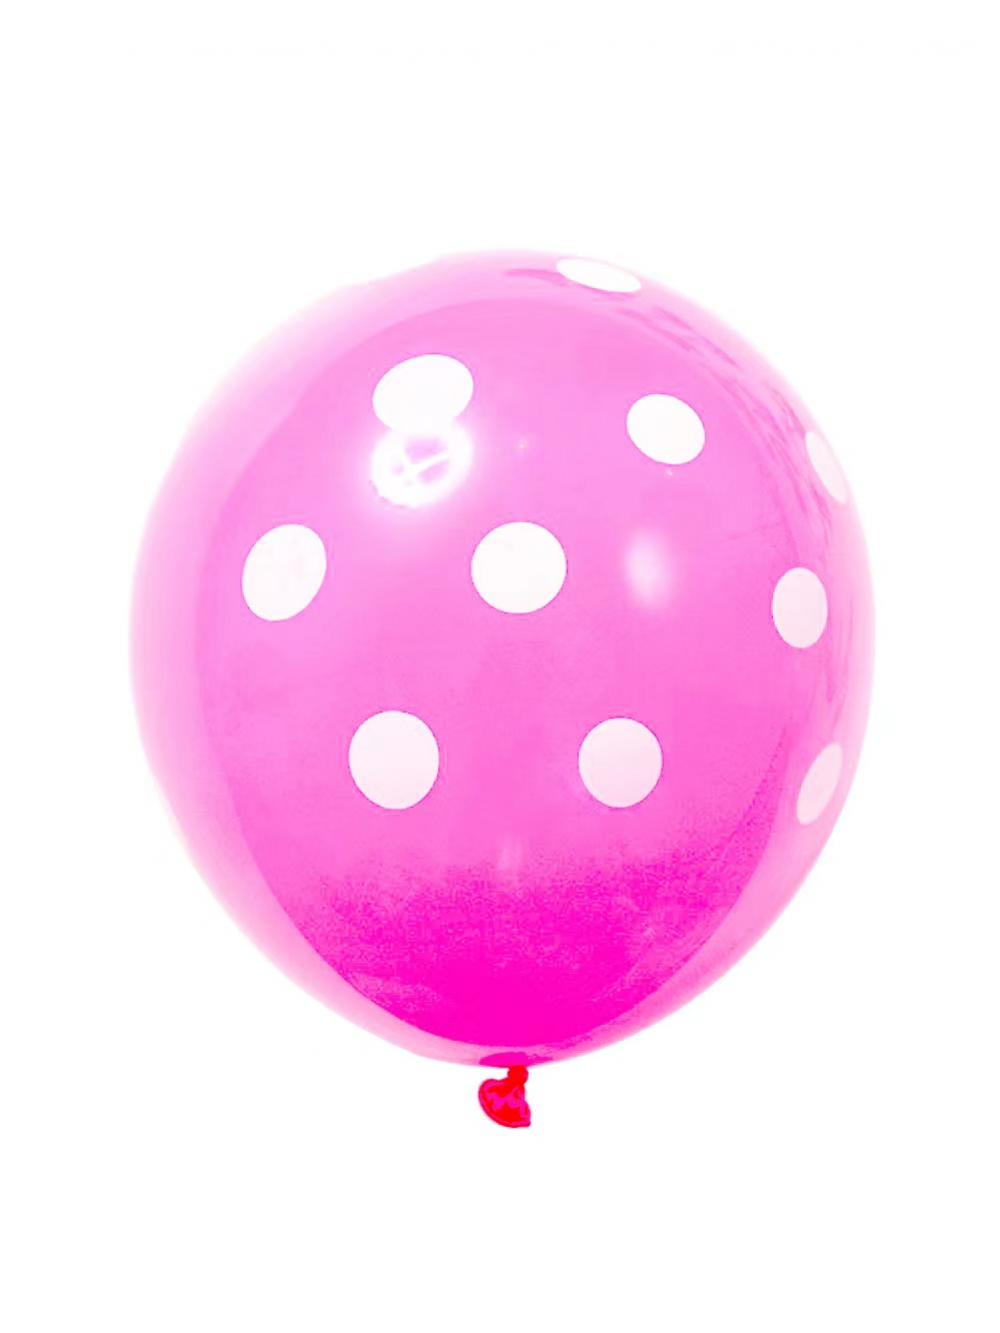 12 Inch Standard Polka Dot Balloons Pink Balloon White Dot (10PCS)